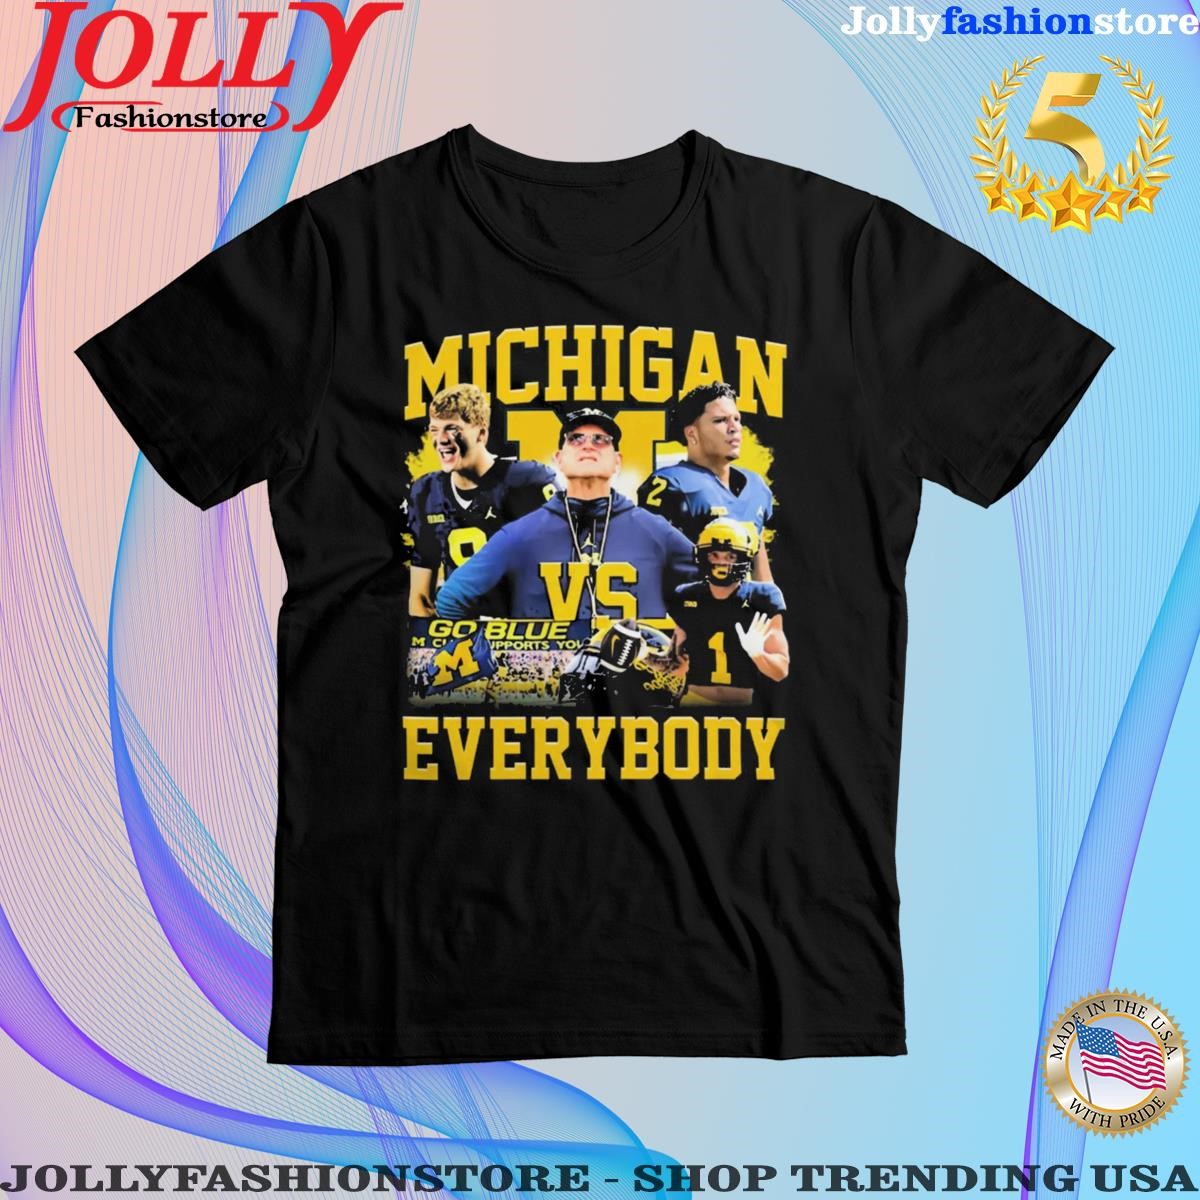 Michigan wolverines Football team vs everybody Shirt